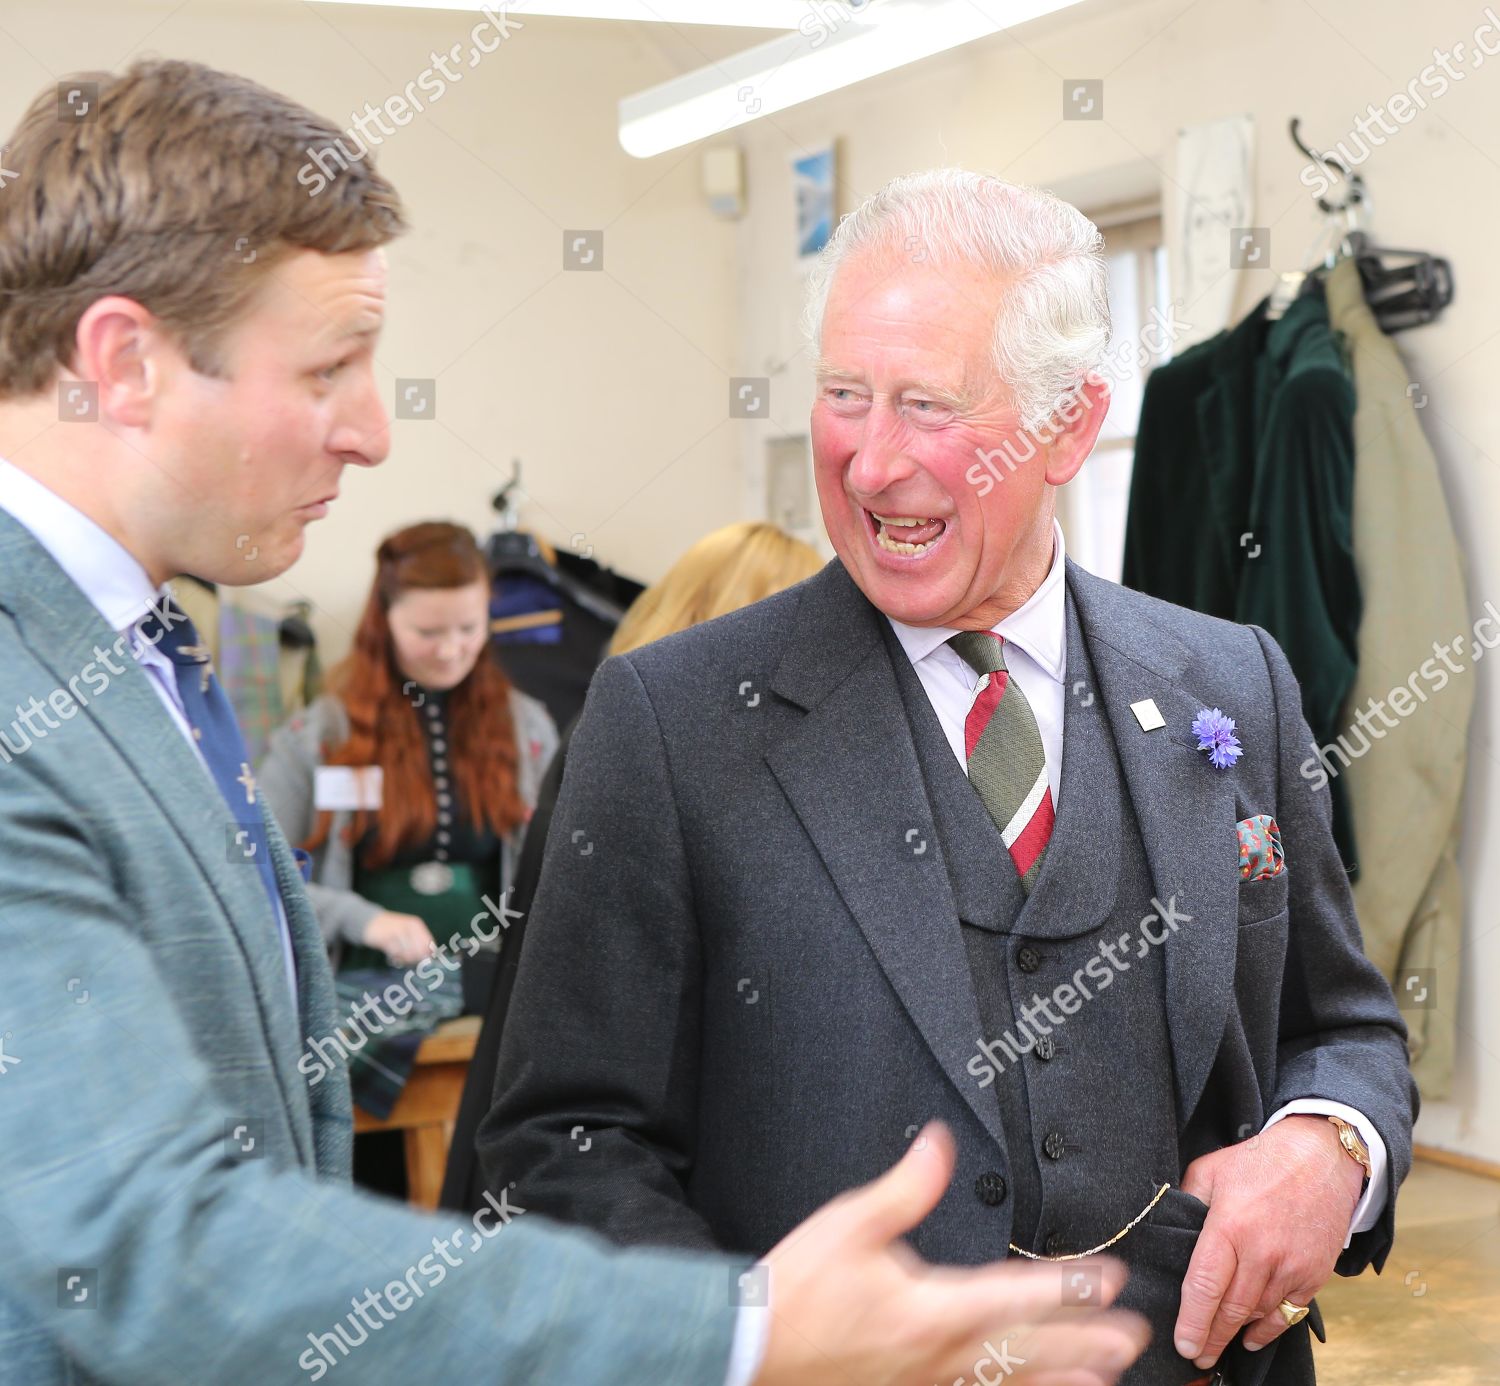 prince-charles-visits-beauly-scotland-uk-shutterstock-editorial-10355332k.jpg